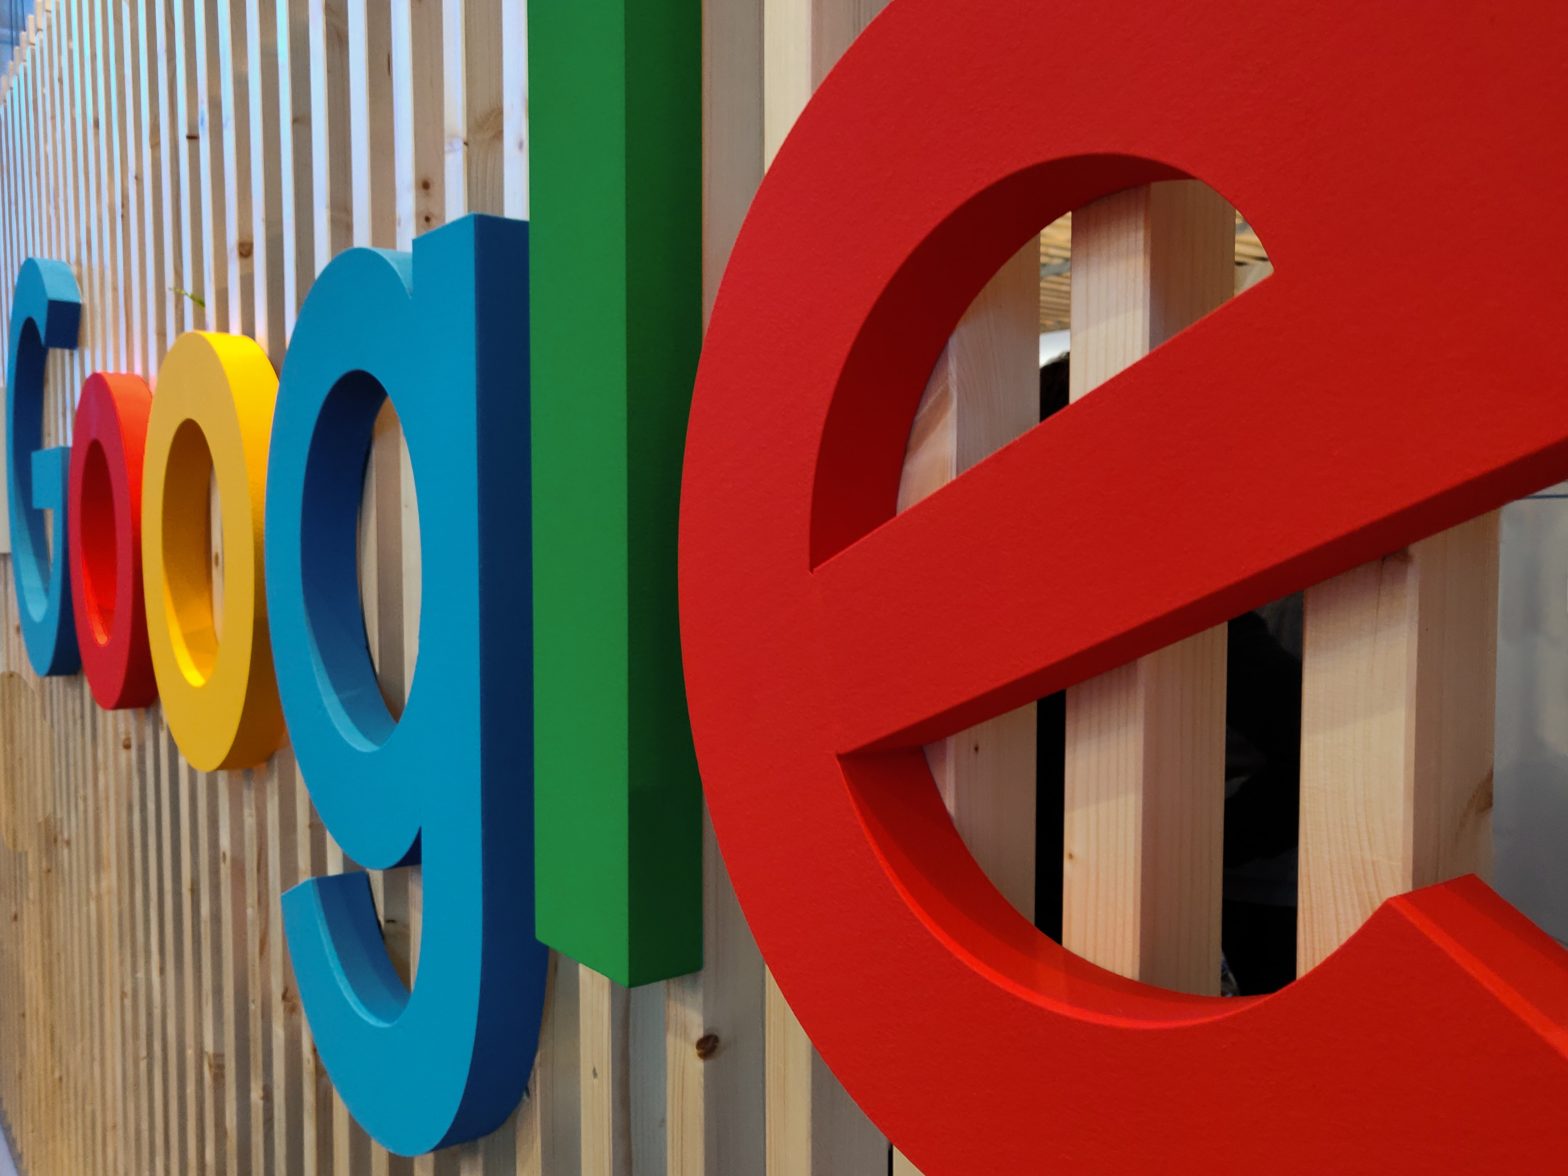 Google "Tightening Its Belt" Regarding Employee Travel And Certain Perks